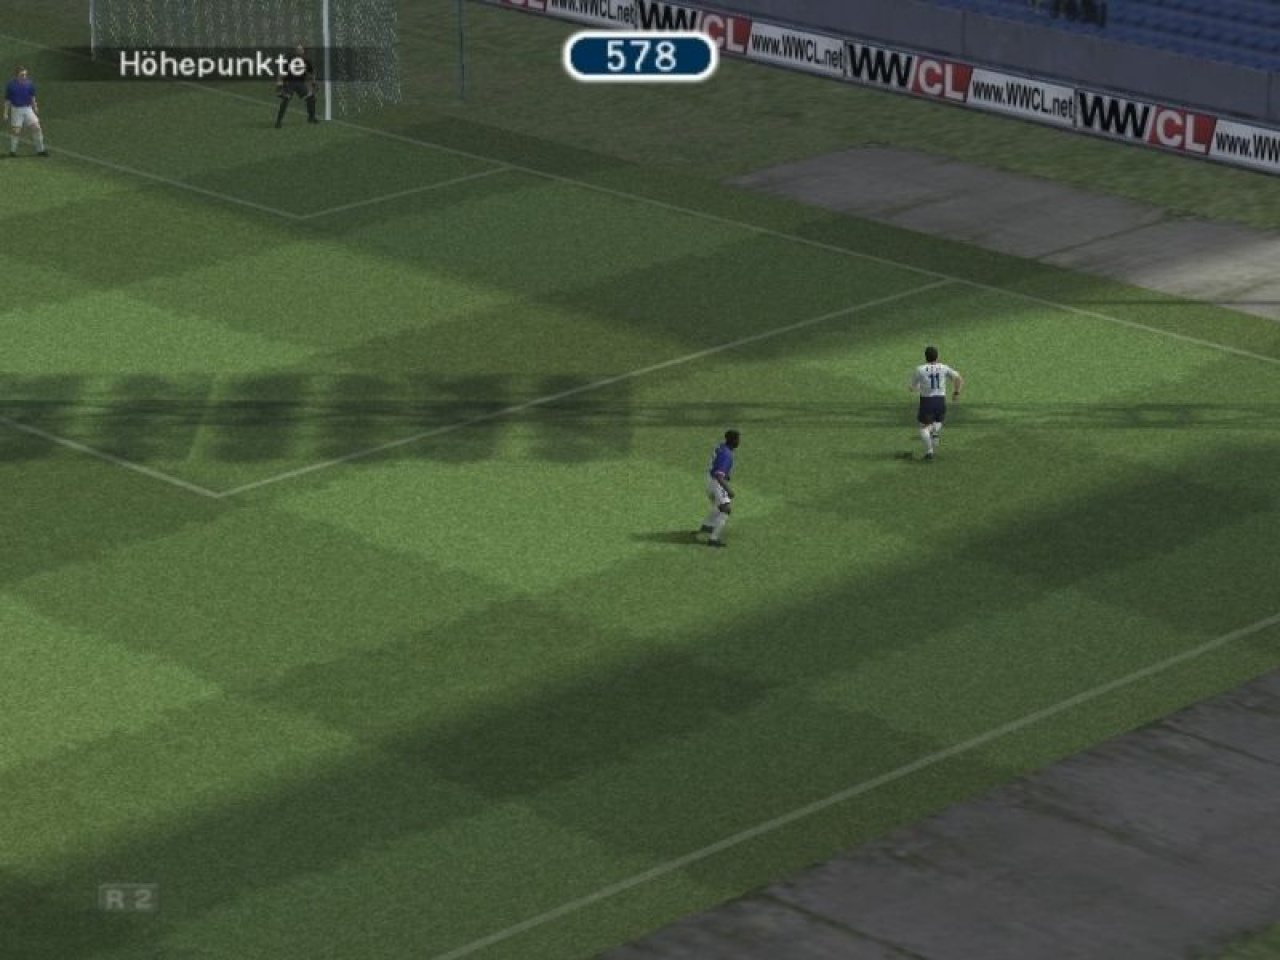 Pro Evolution Soccer 5 - PS2 Gameplay